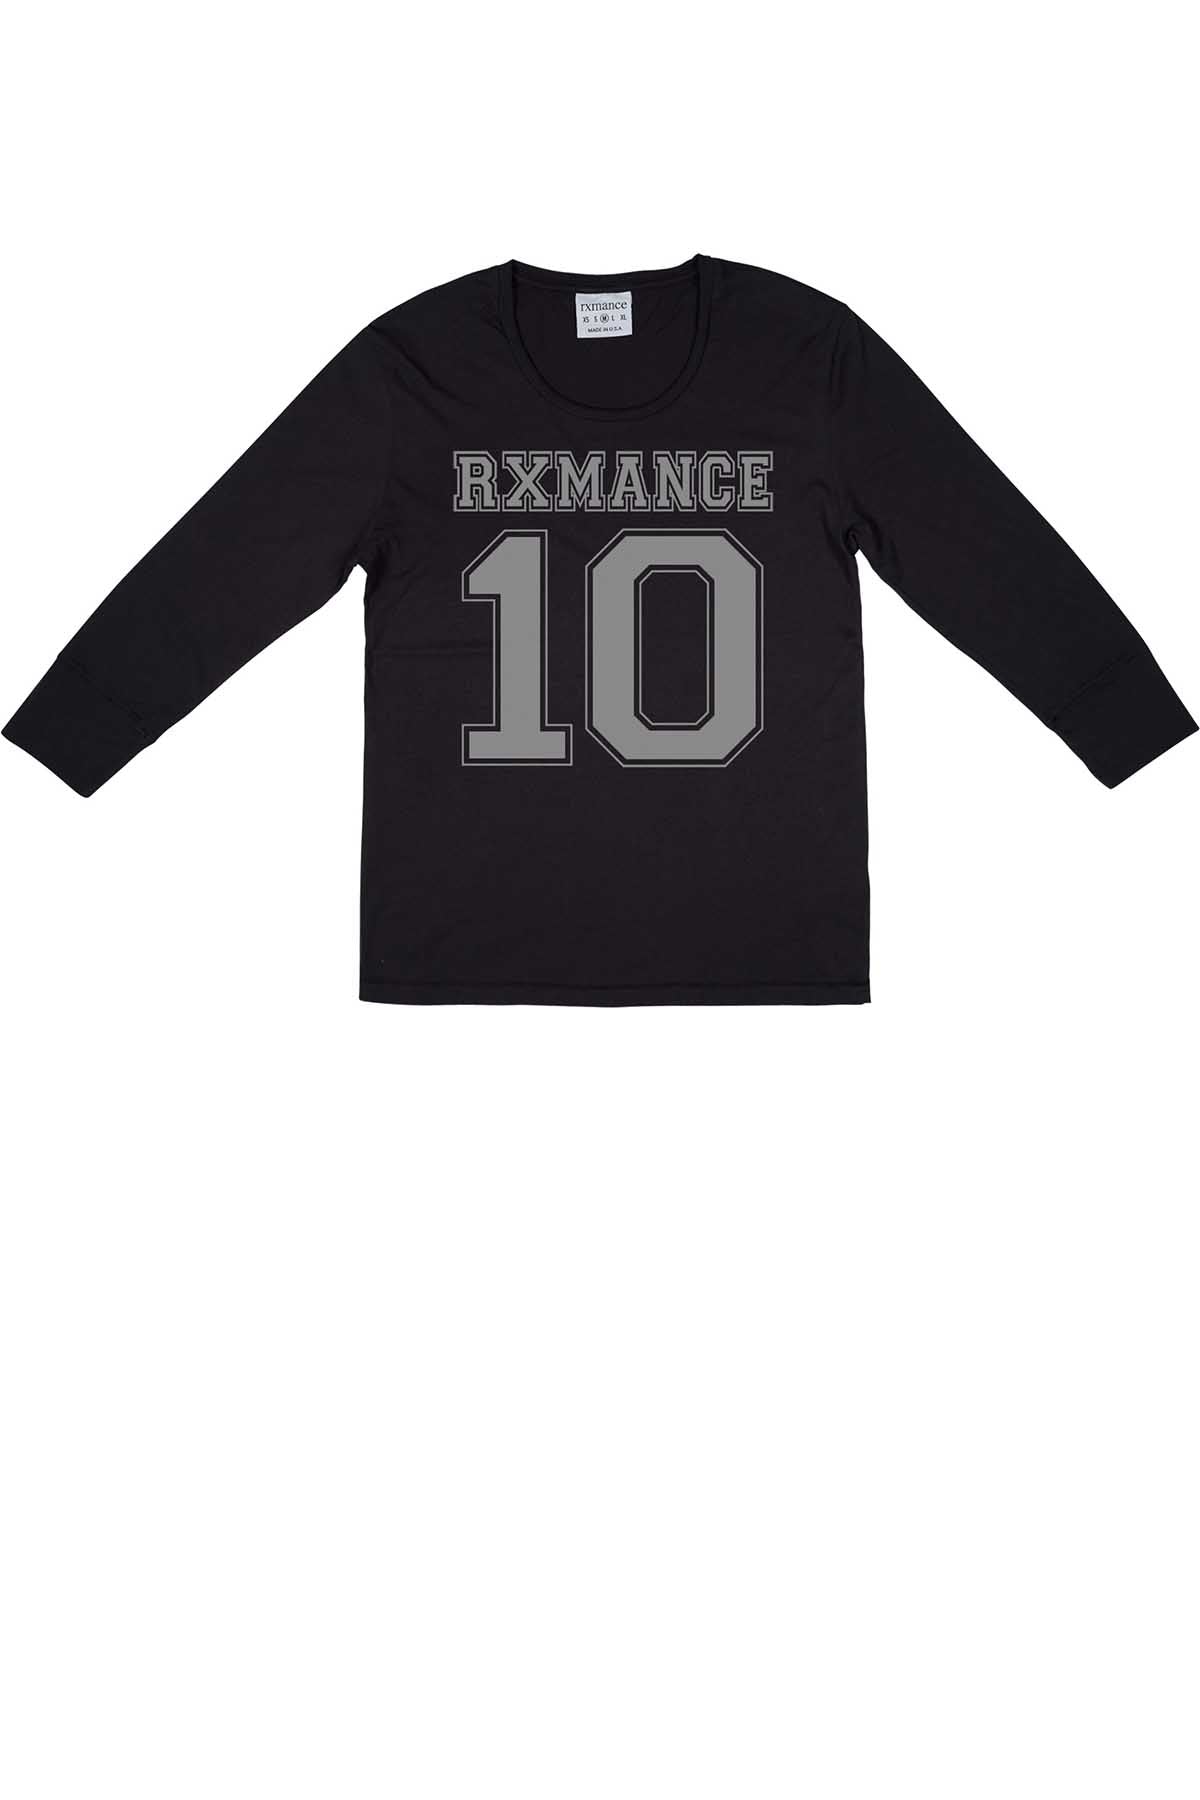 Rxmance Unisex Black Jersey 3/4-Sleeve Lounge Tee